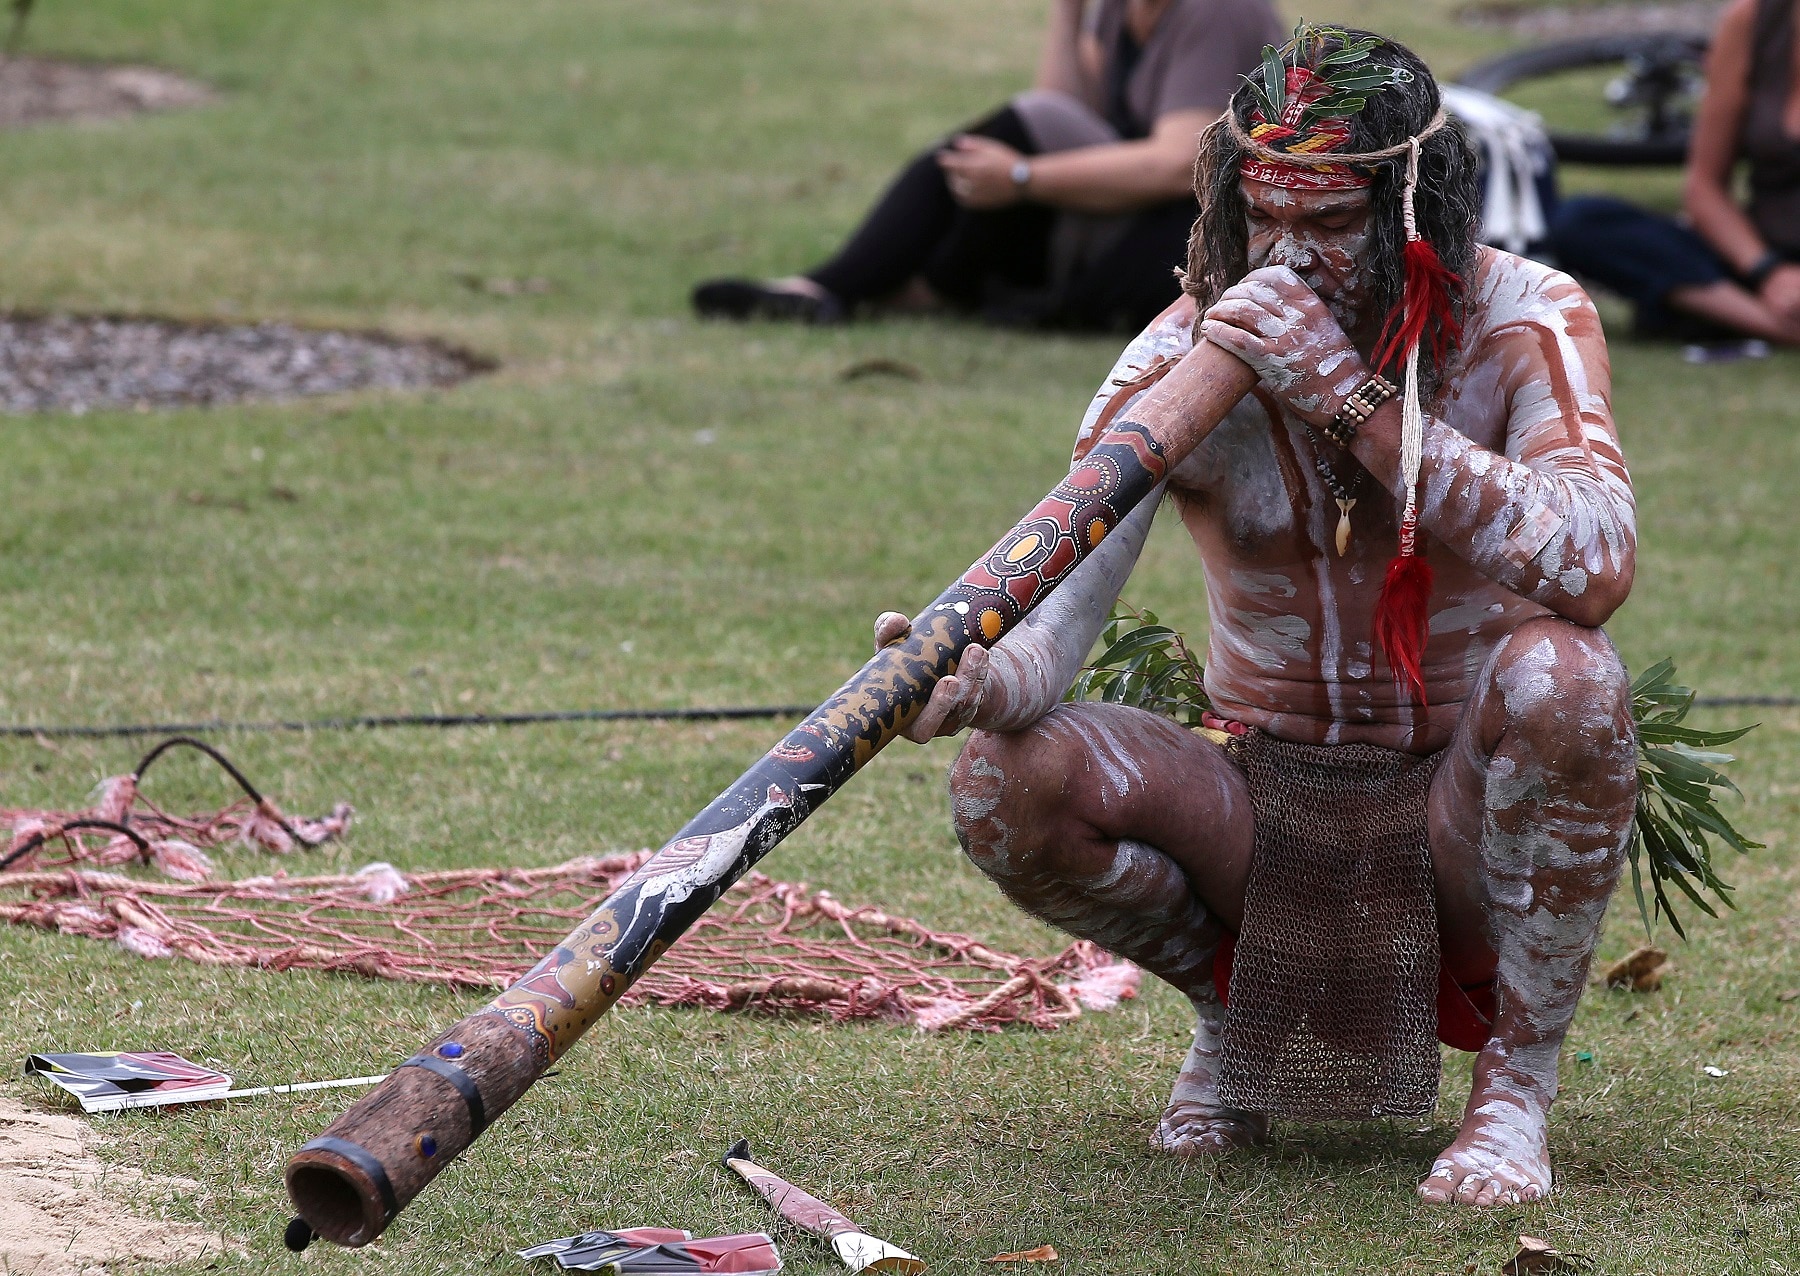 A man plays a didgeridoo at an Australia Day event.  